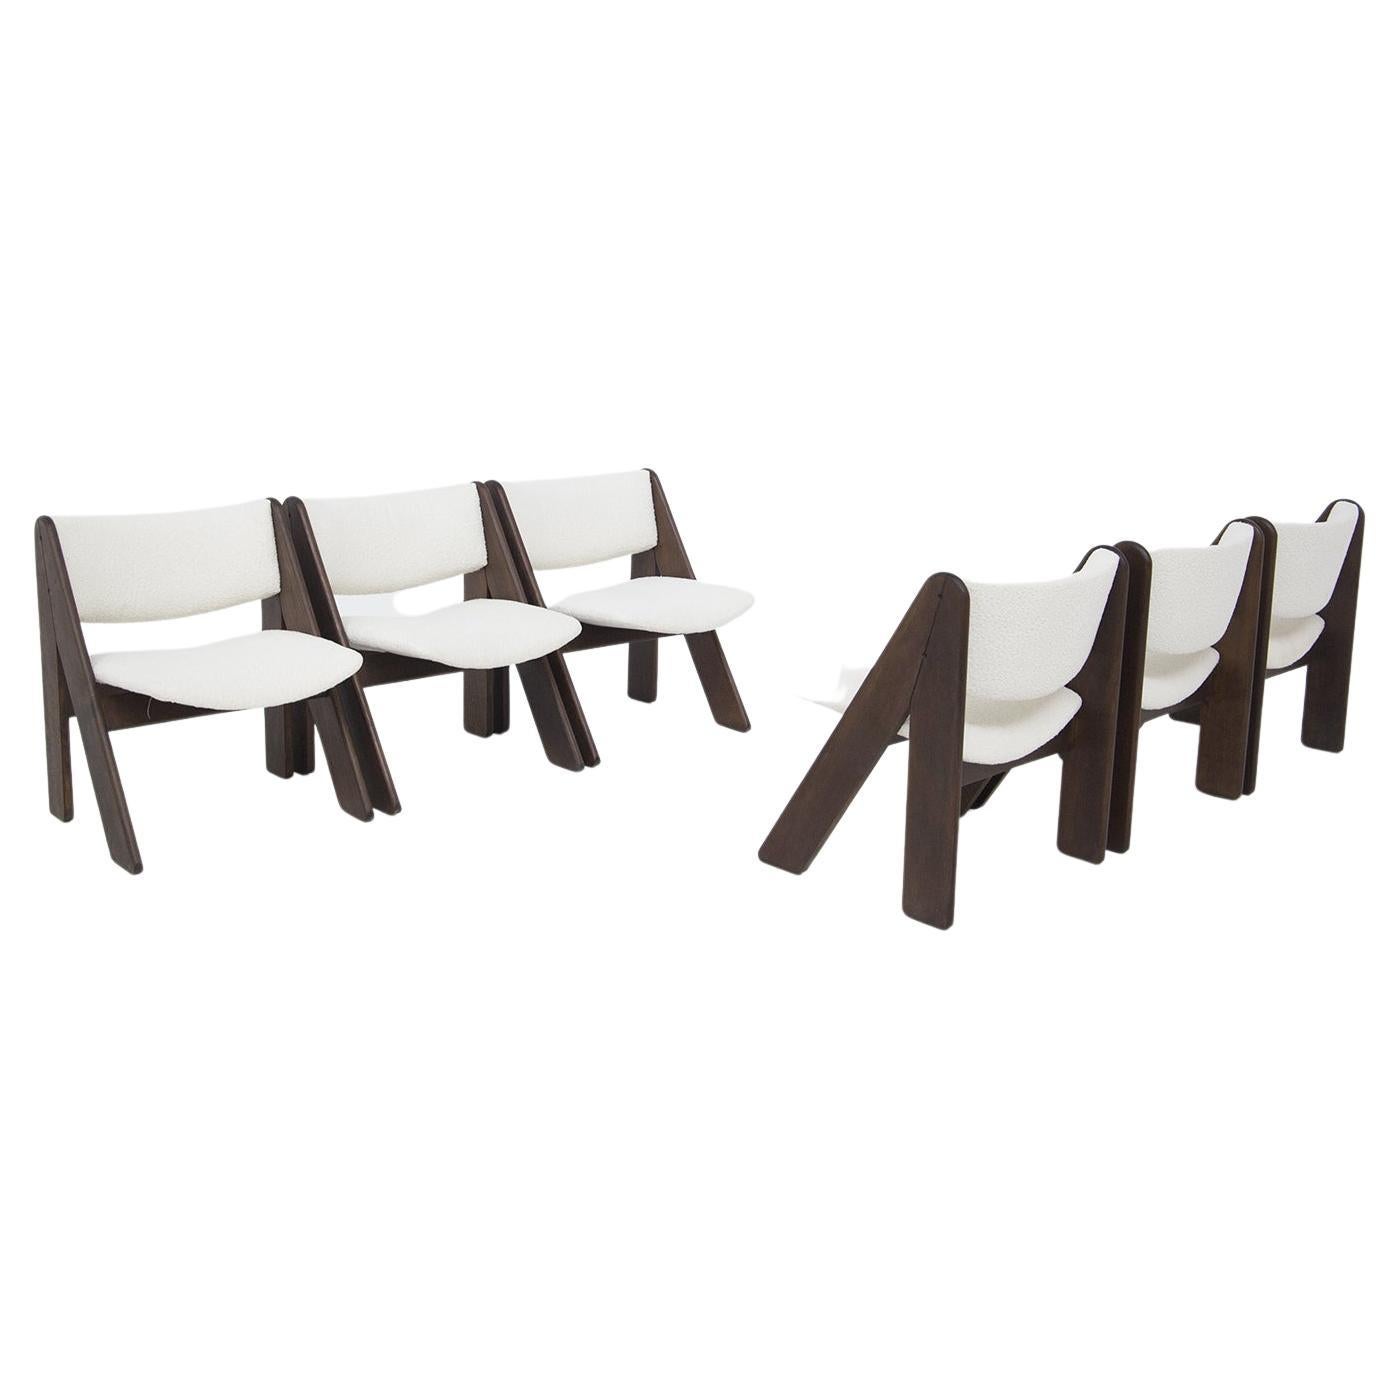 Set of 6 Wooden Chairs by Gigi Sabadin for Stilwood